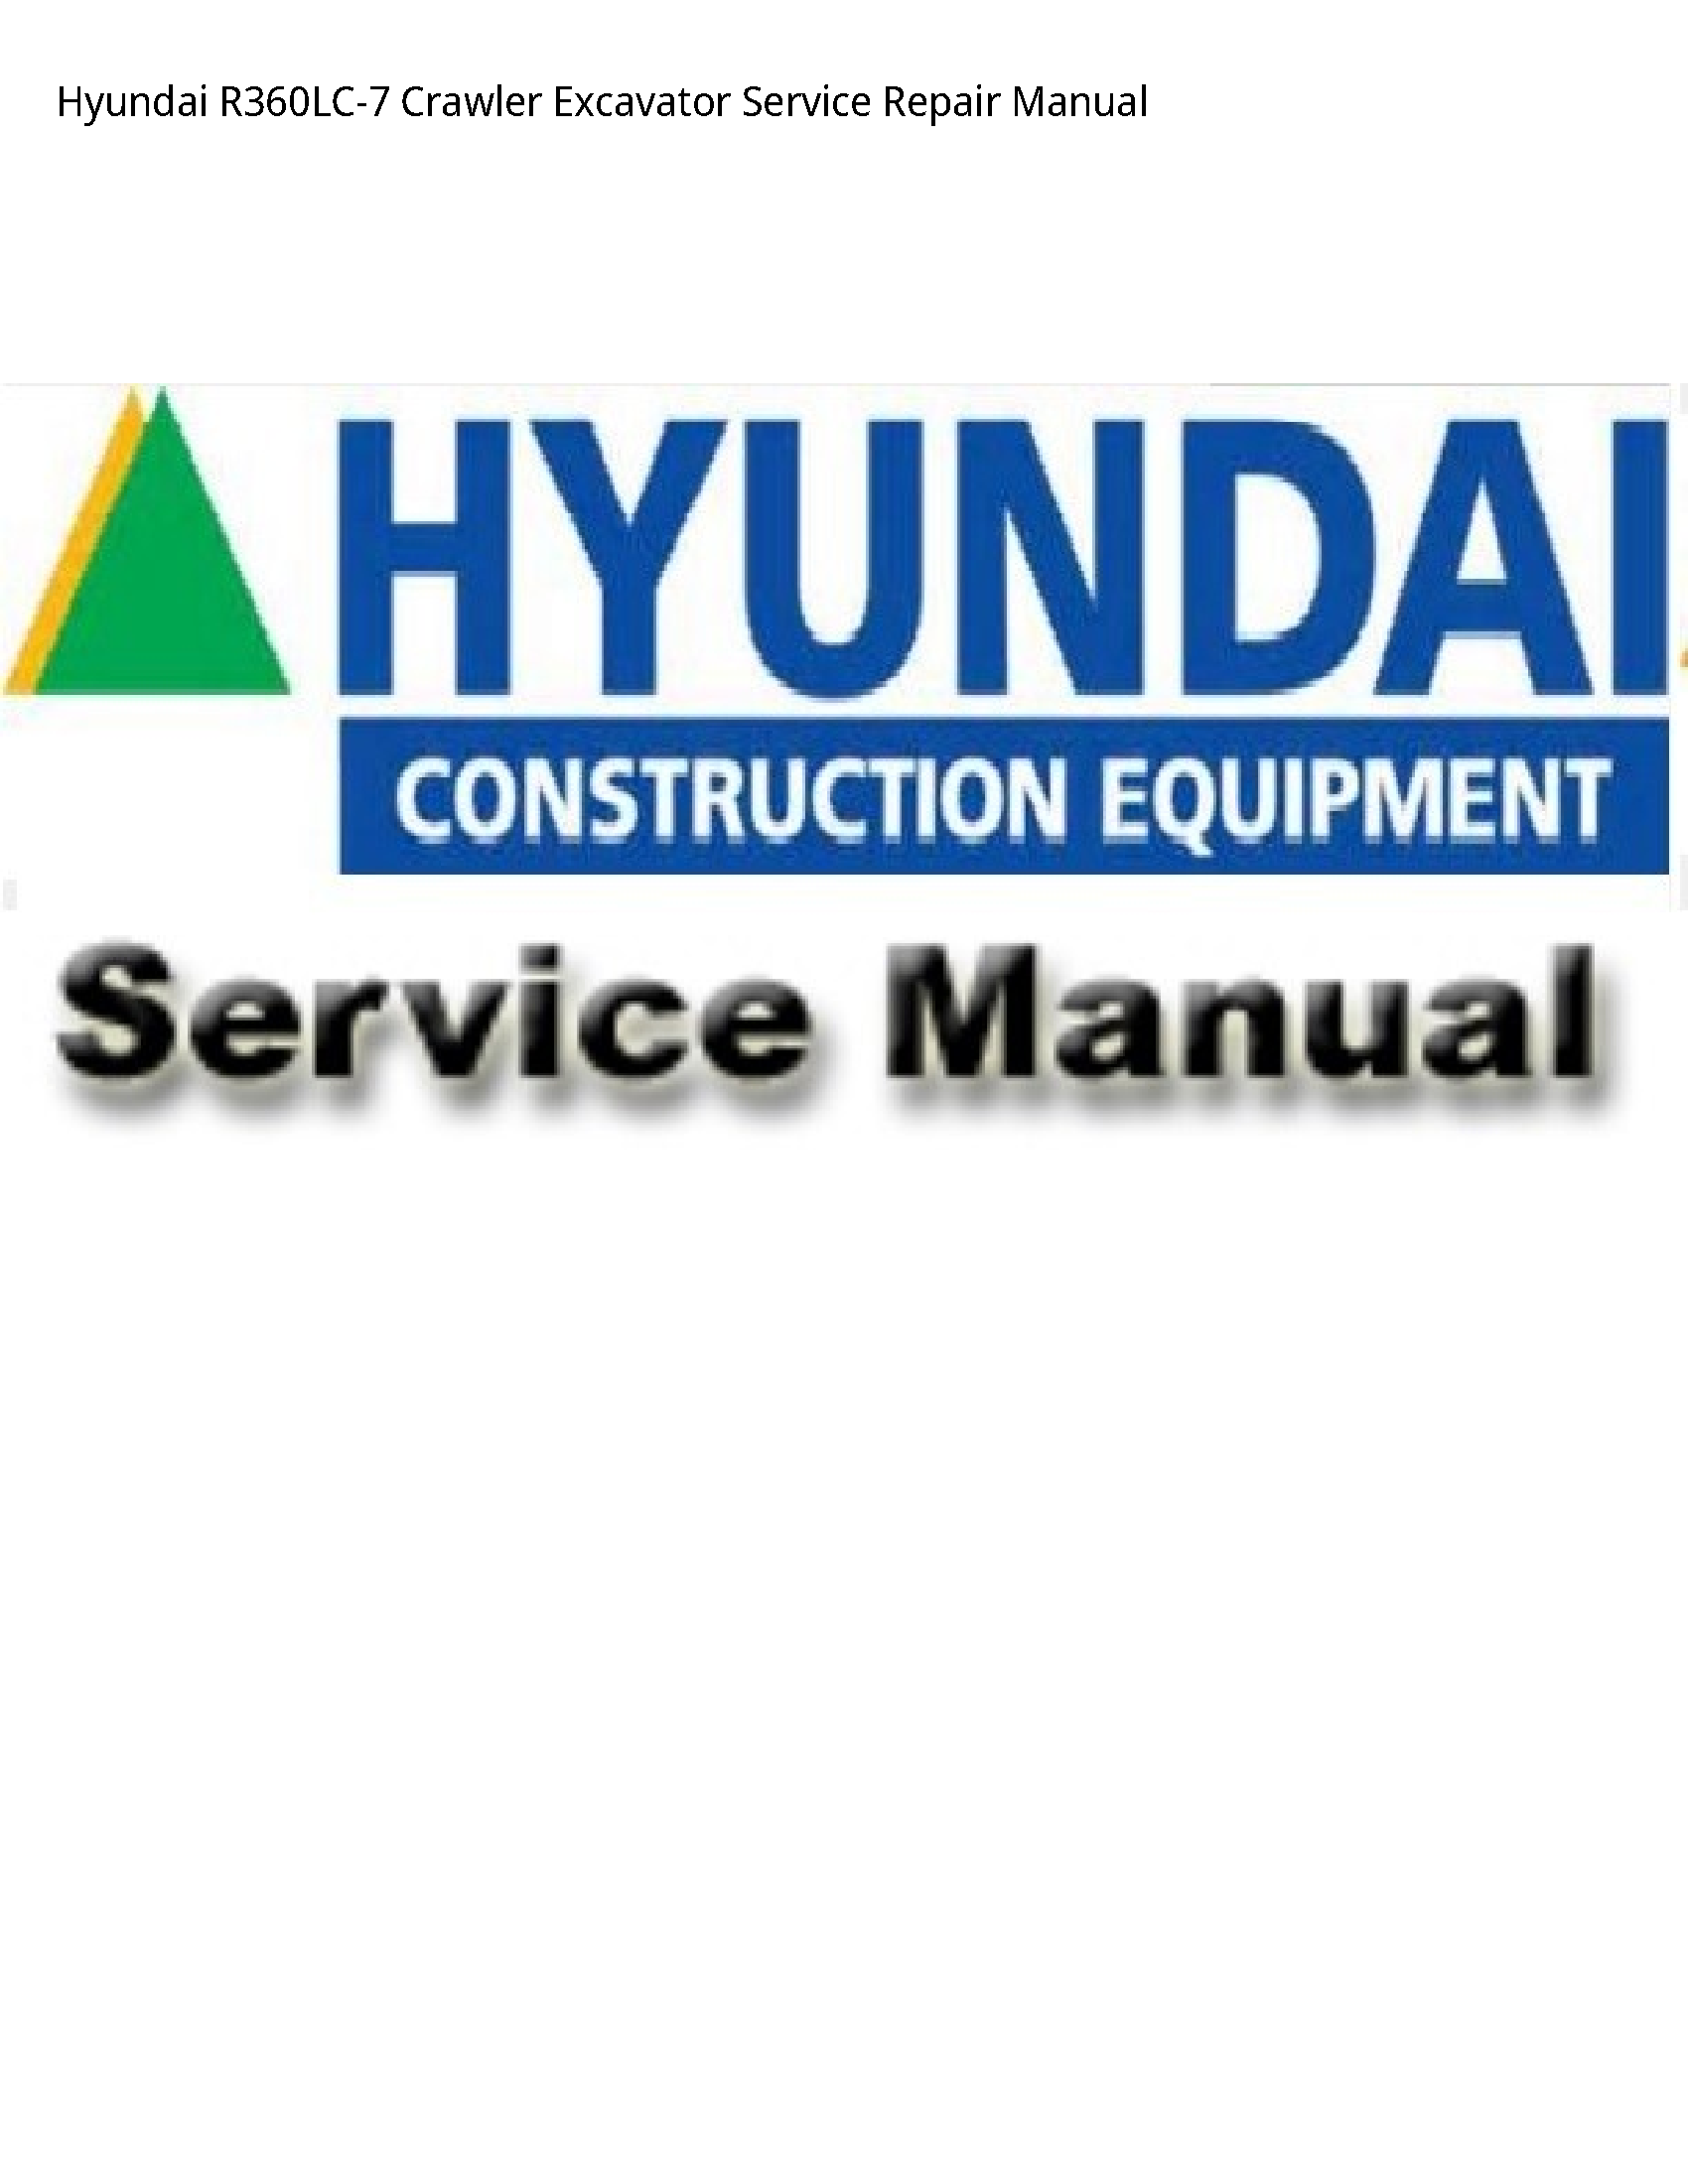 Hyundai R360LC-7 Crawler Excavator manual